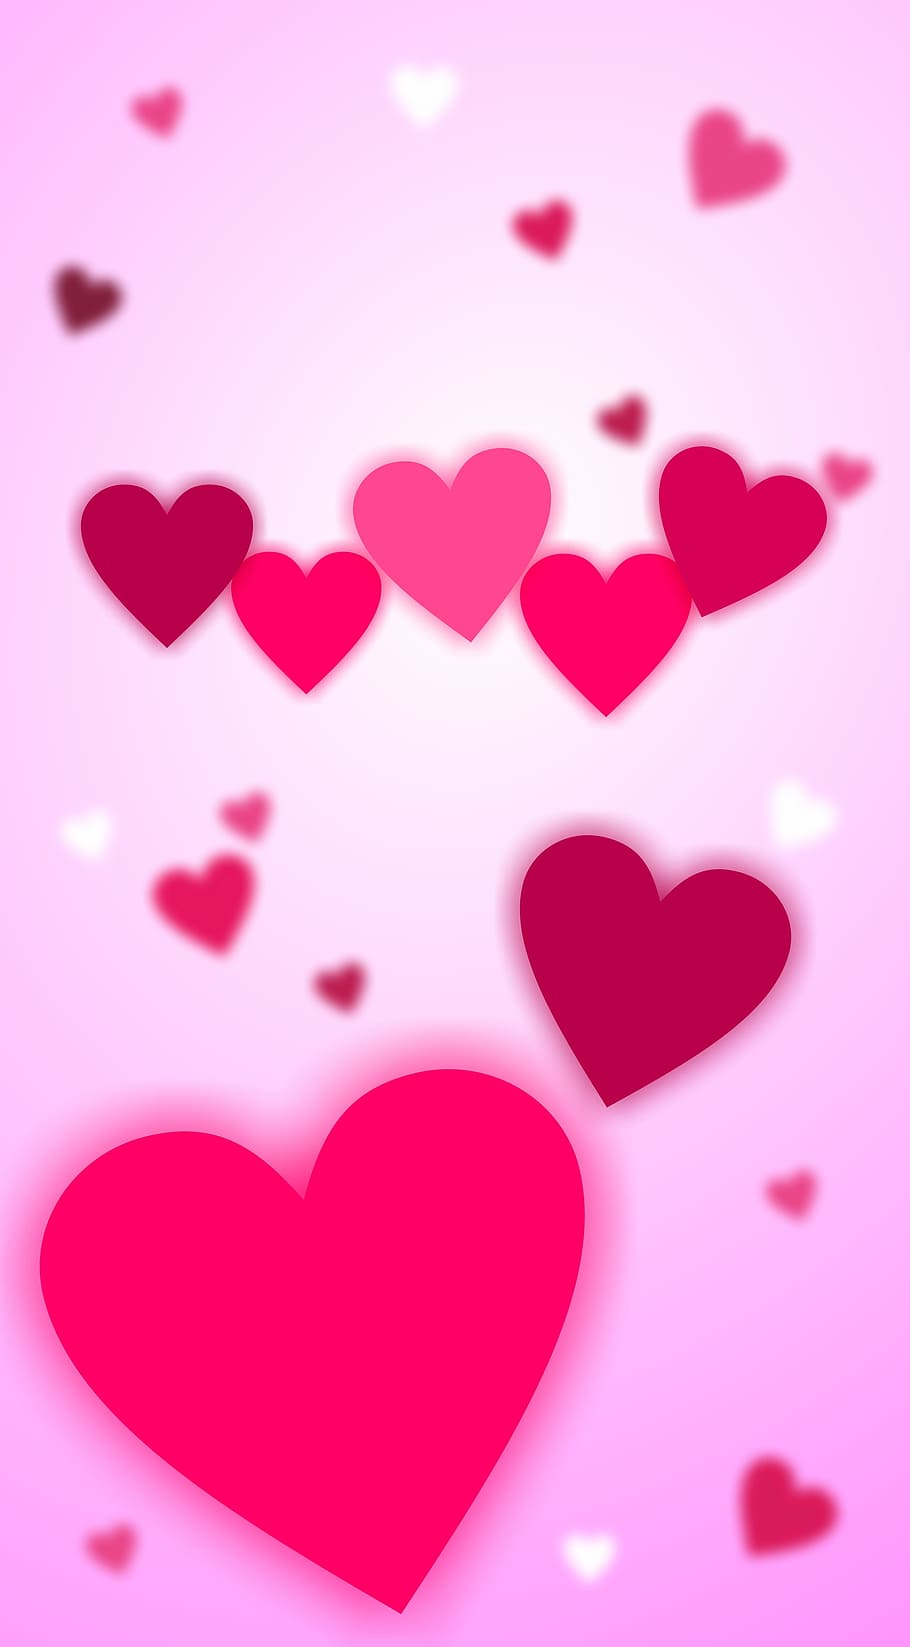 1920x1200px | free download | HD wallpaper: love, heart ...